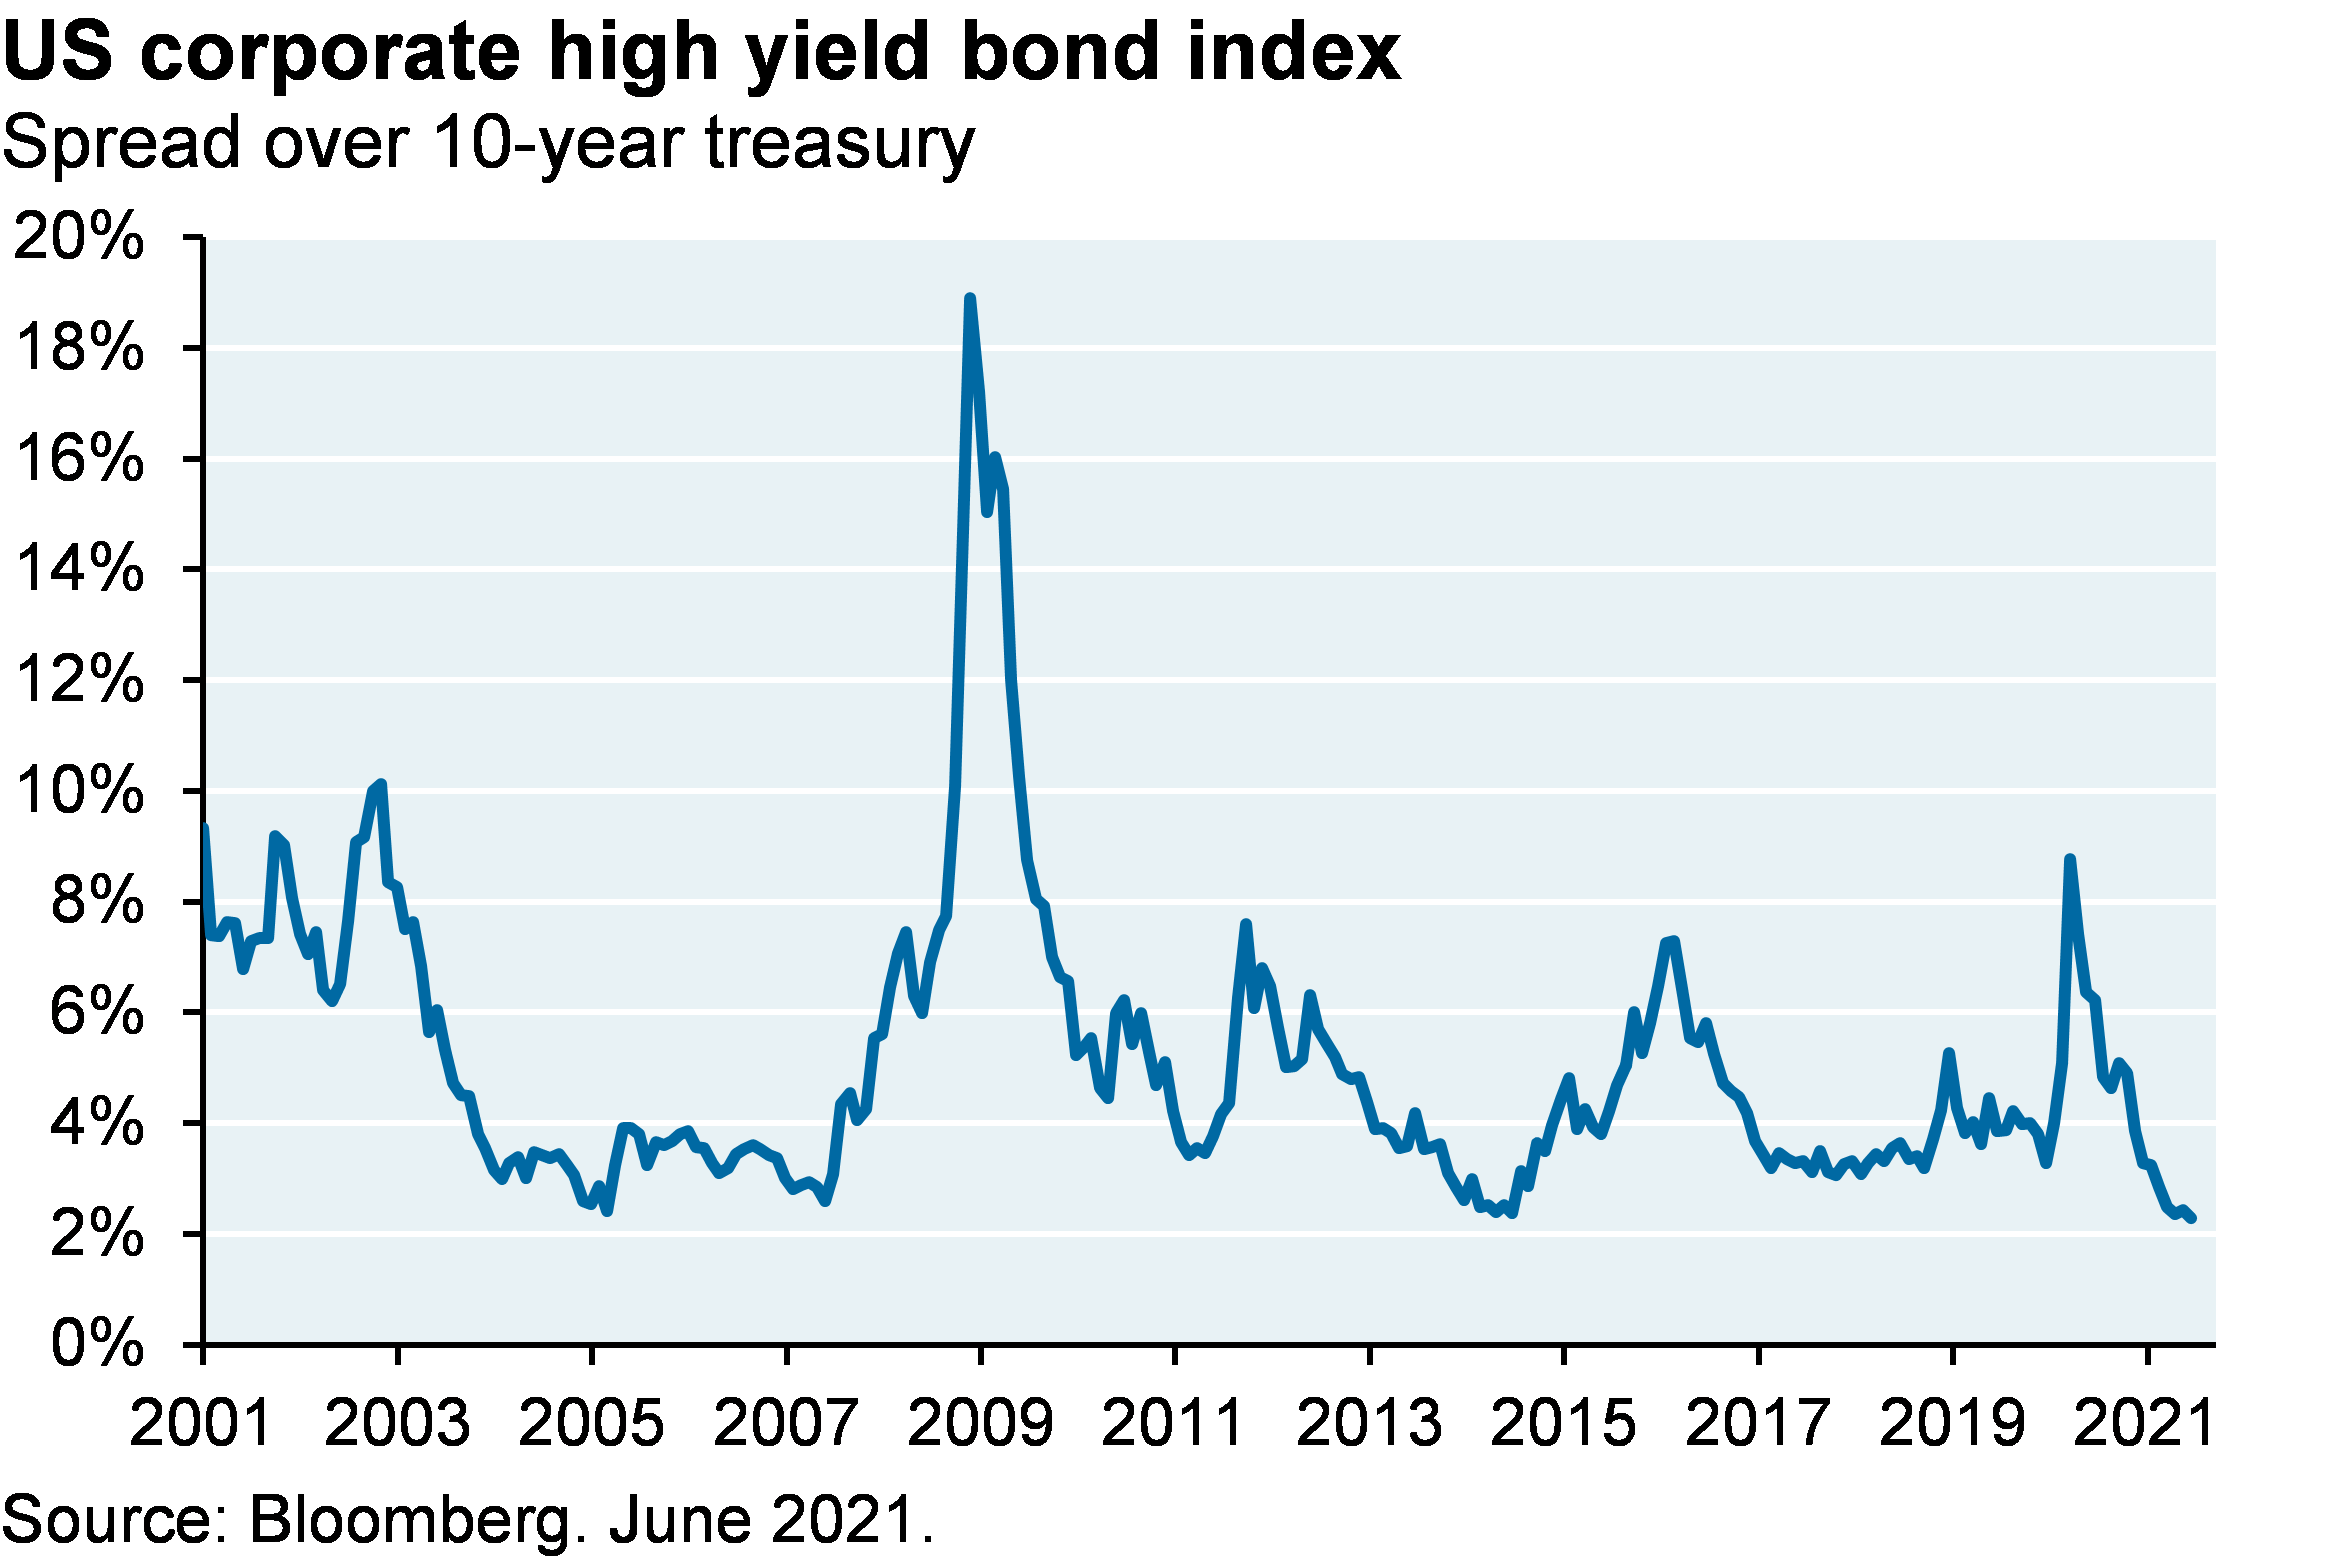 US corporate high yield bond index